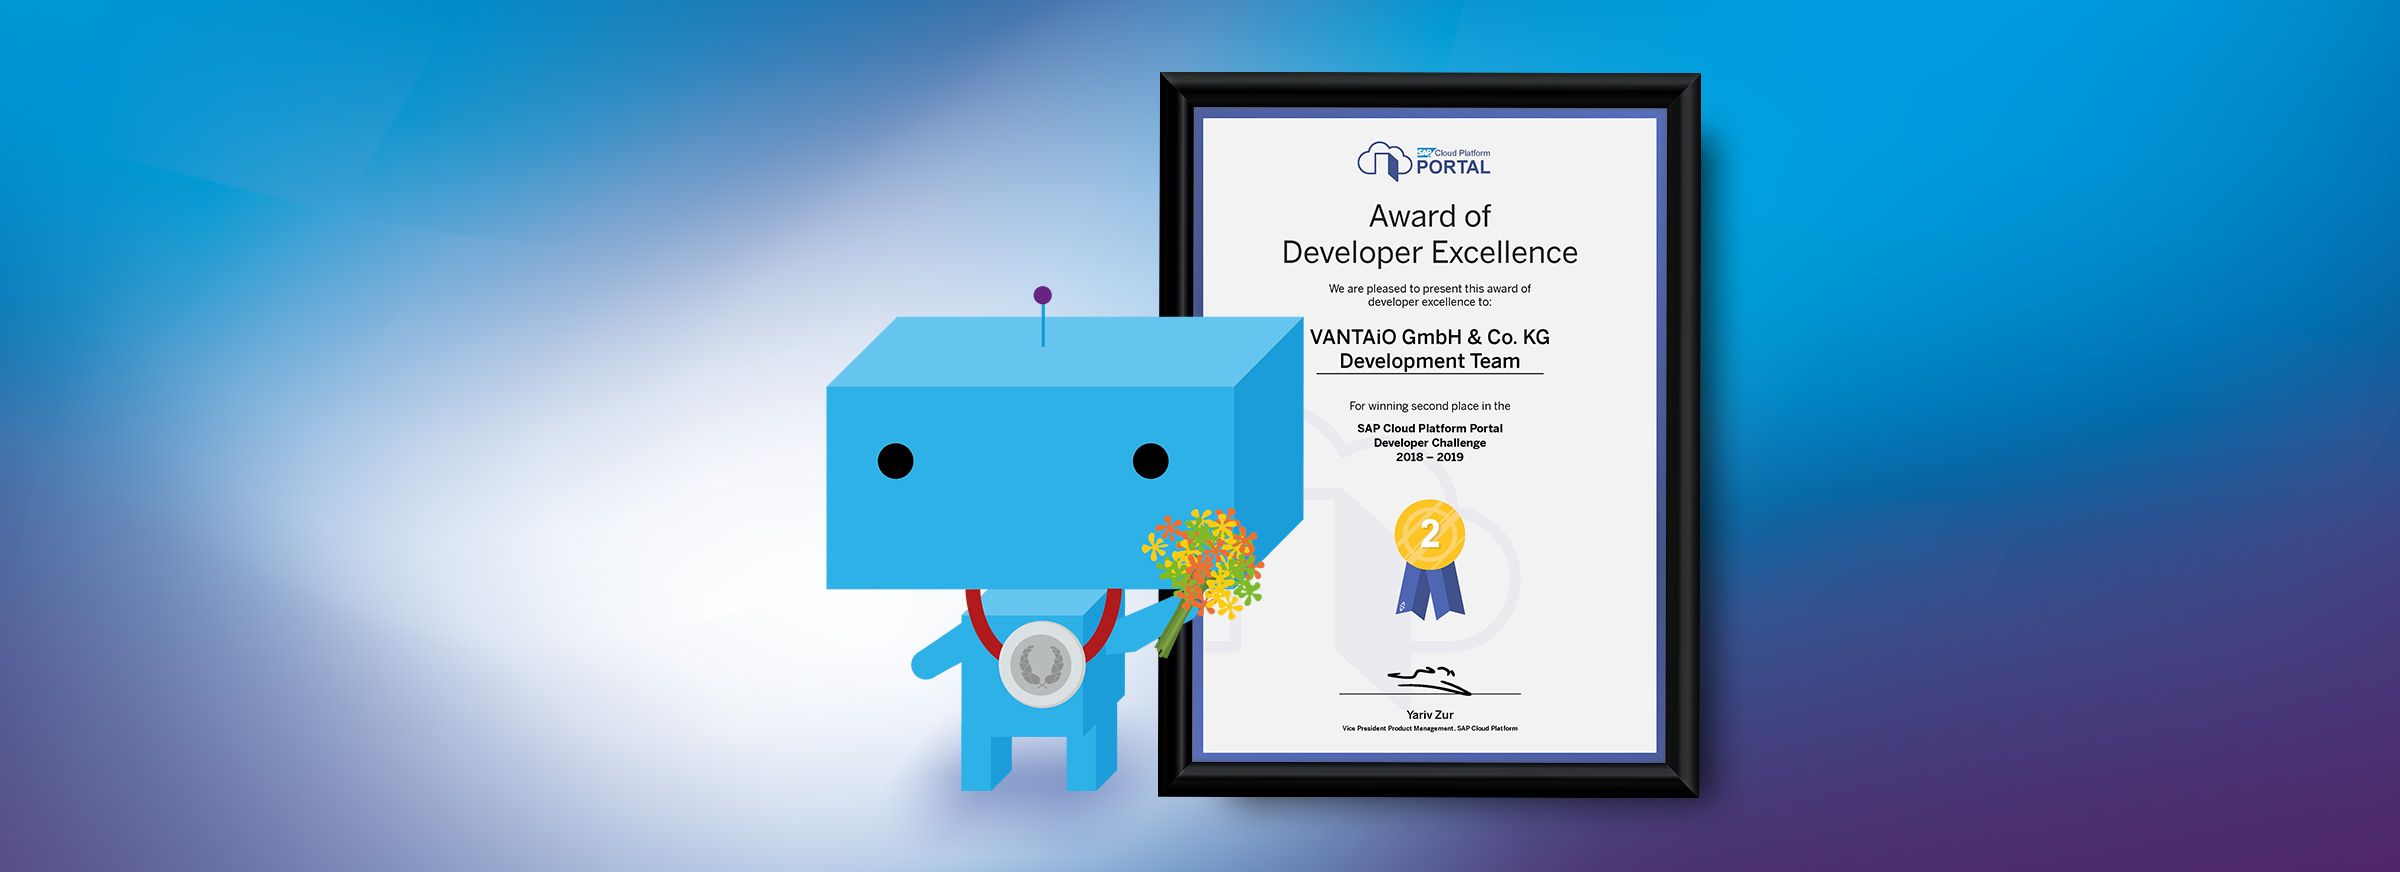 SAP-Award of Developer Excellence